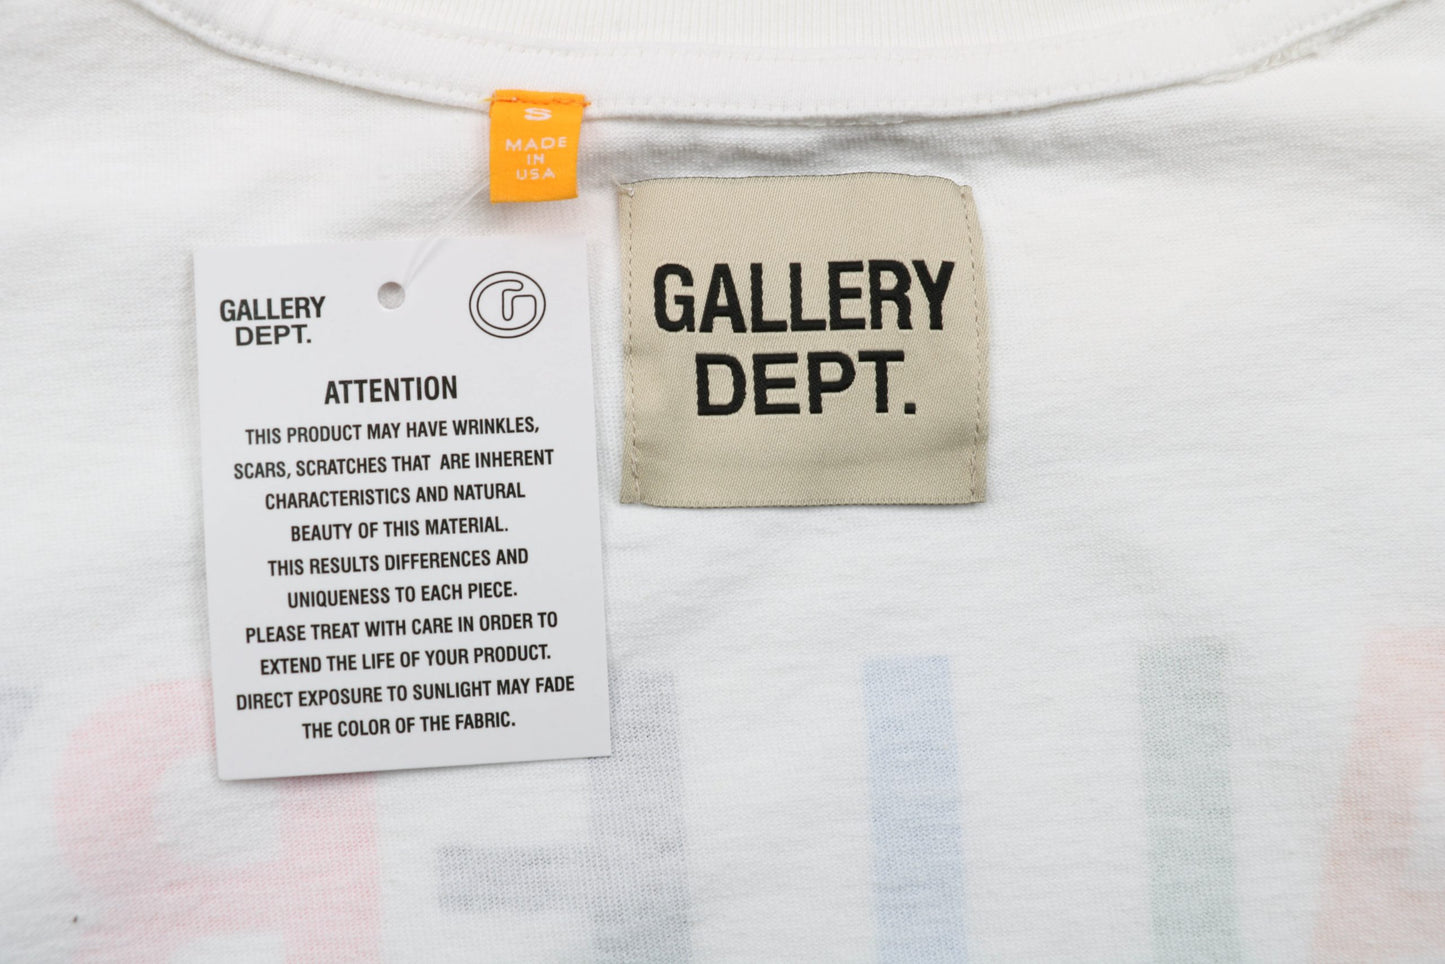 Gallery Dept Rainbow Logo T-Shirt